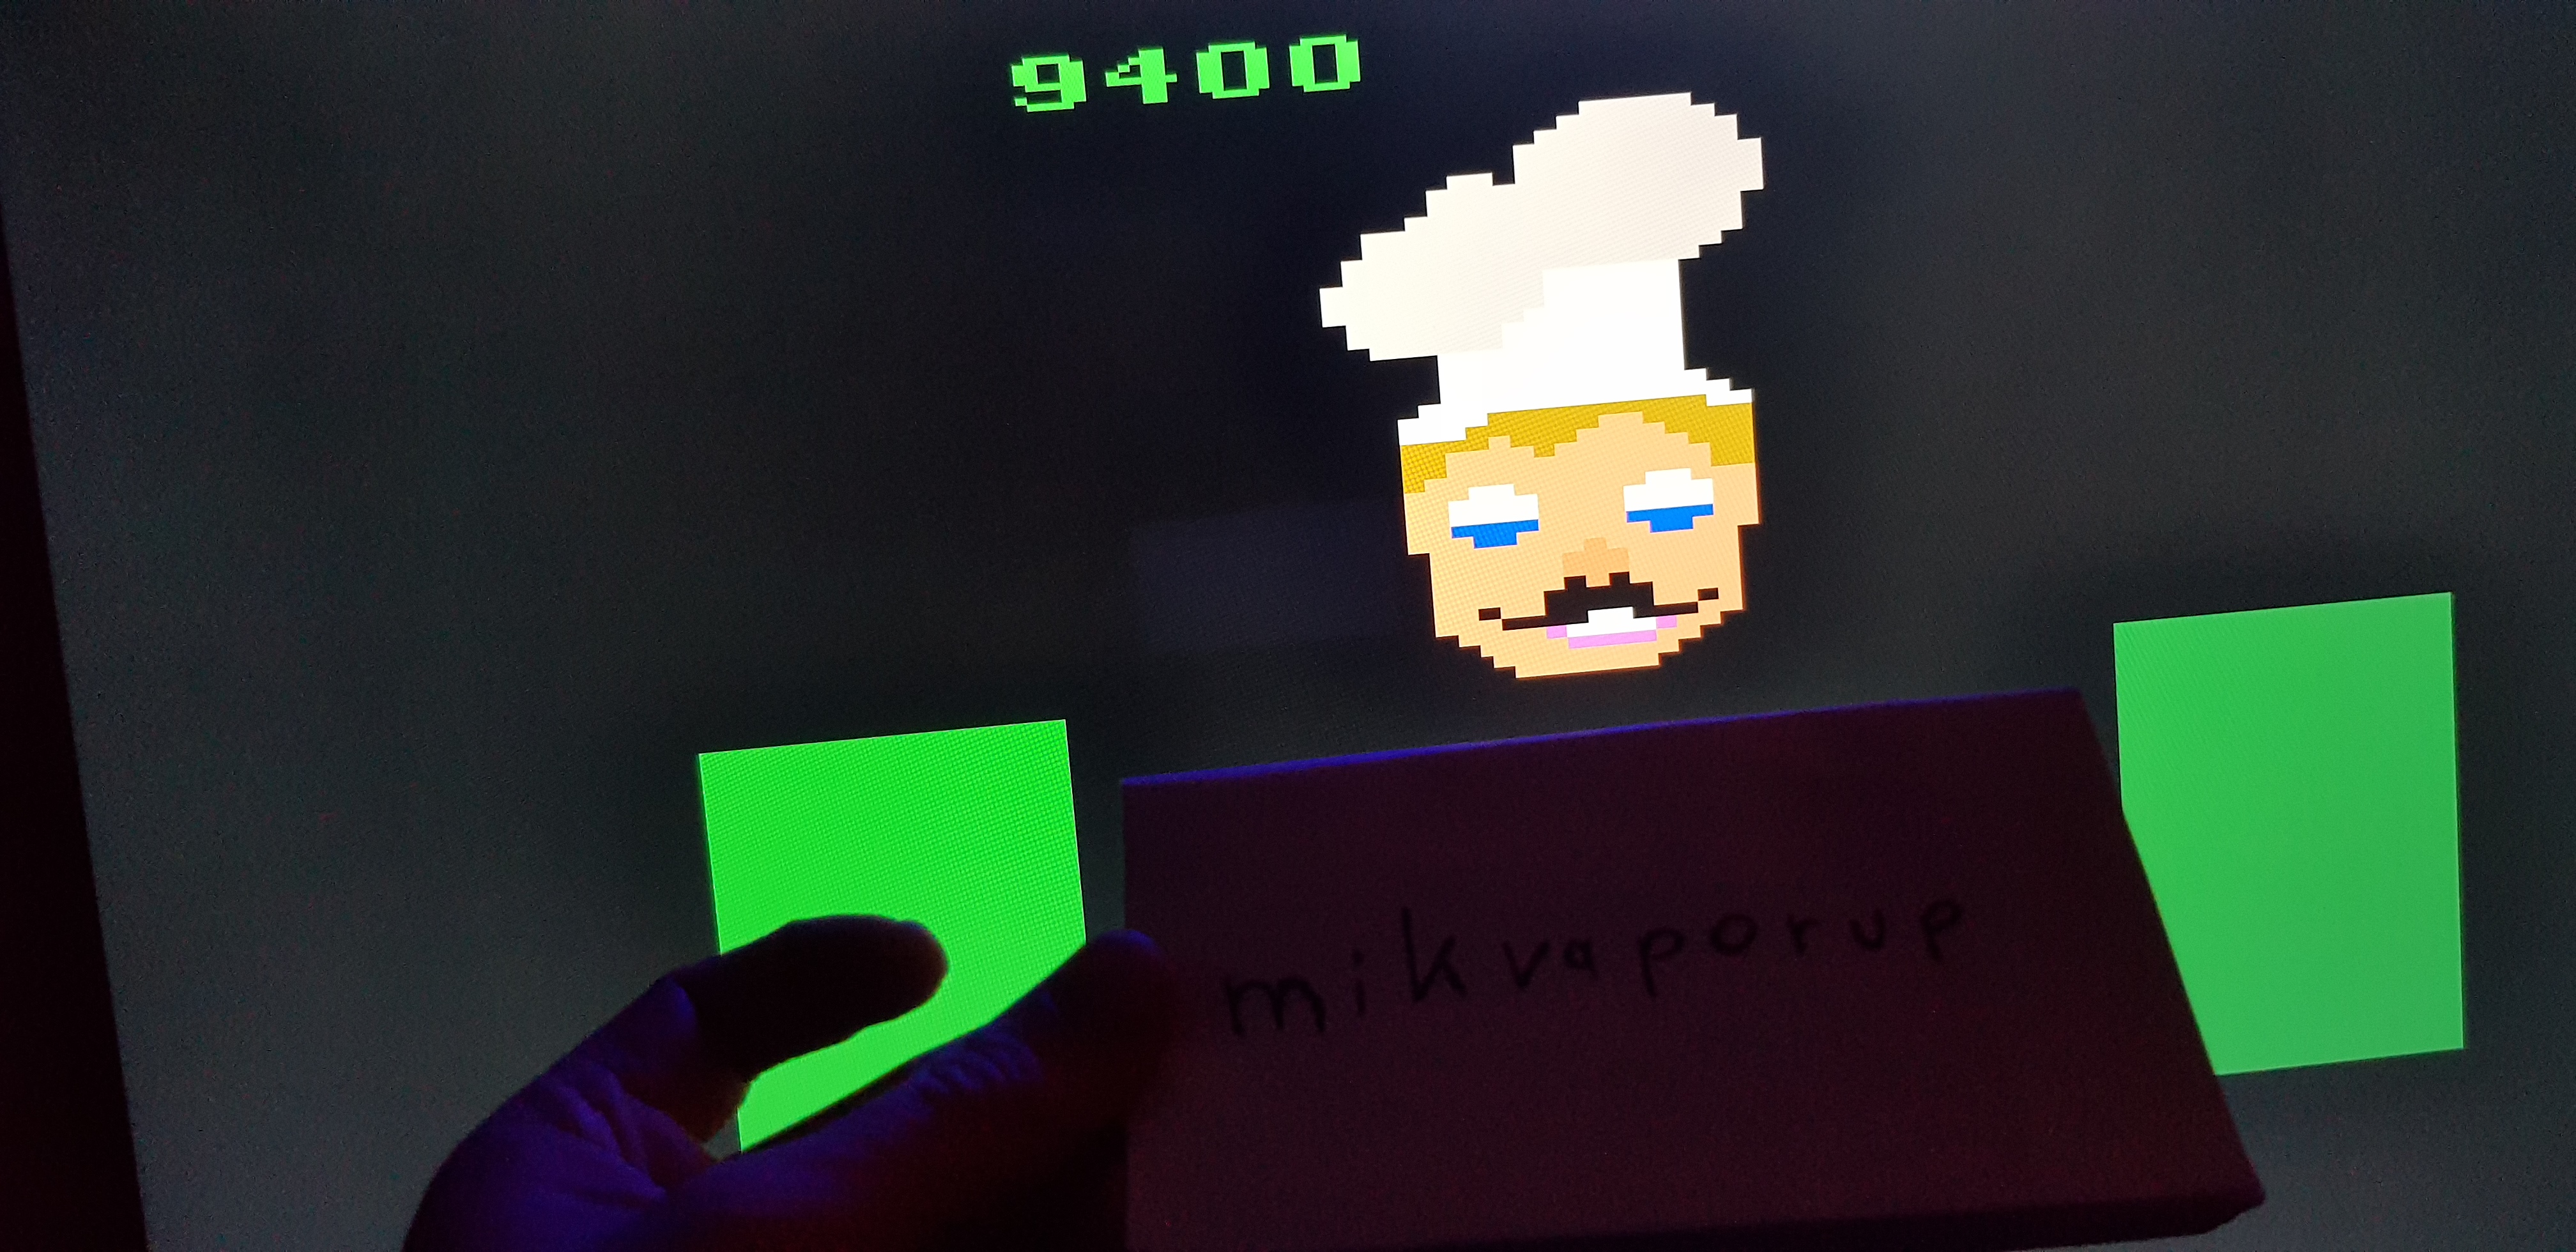 mikvaporup: Cakewalk (Atari 2600 Emulated Novice/B Mode) 9,400 points on 2019-08-21 12:32:43